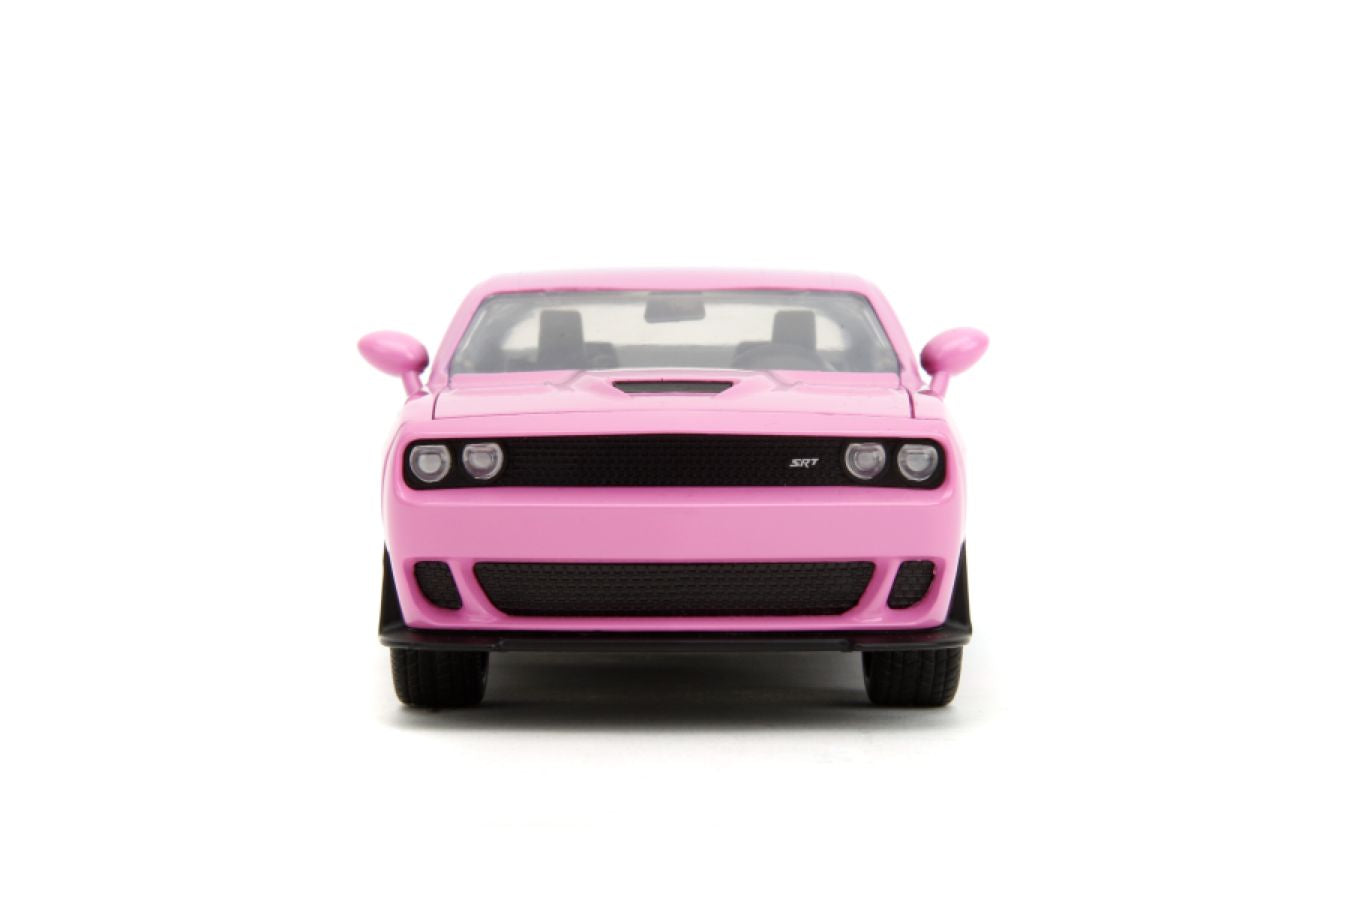 Pink Slips - 2015 Dodge Challenger 1:24 Scale Diecast Vehicle